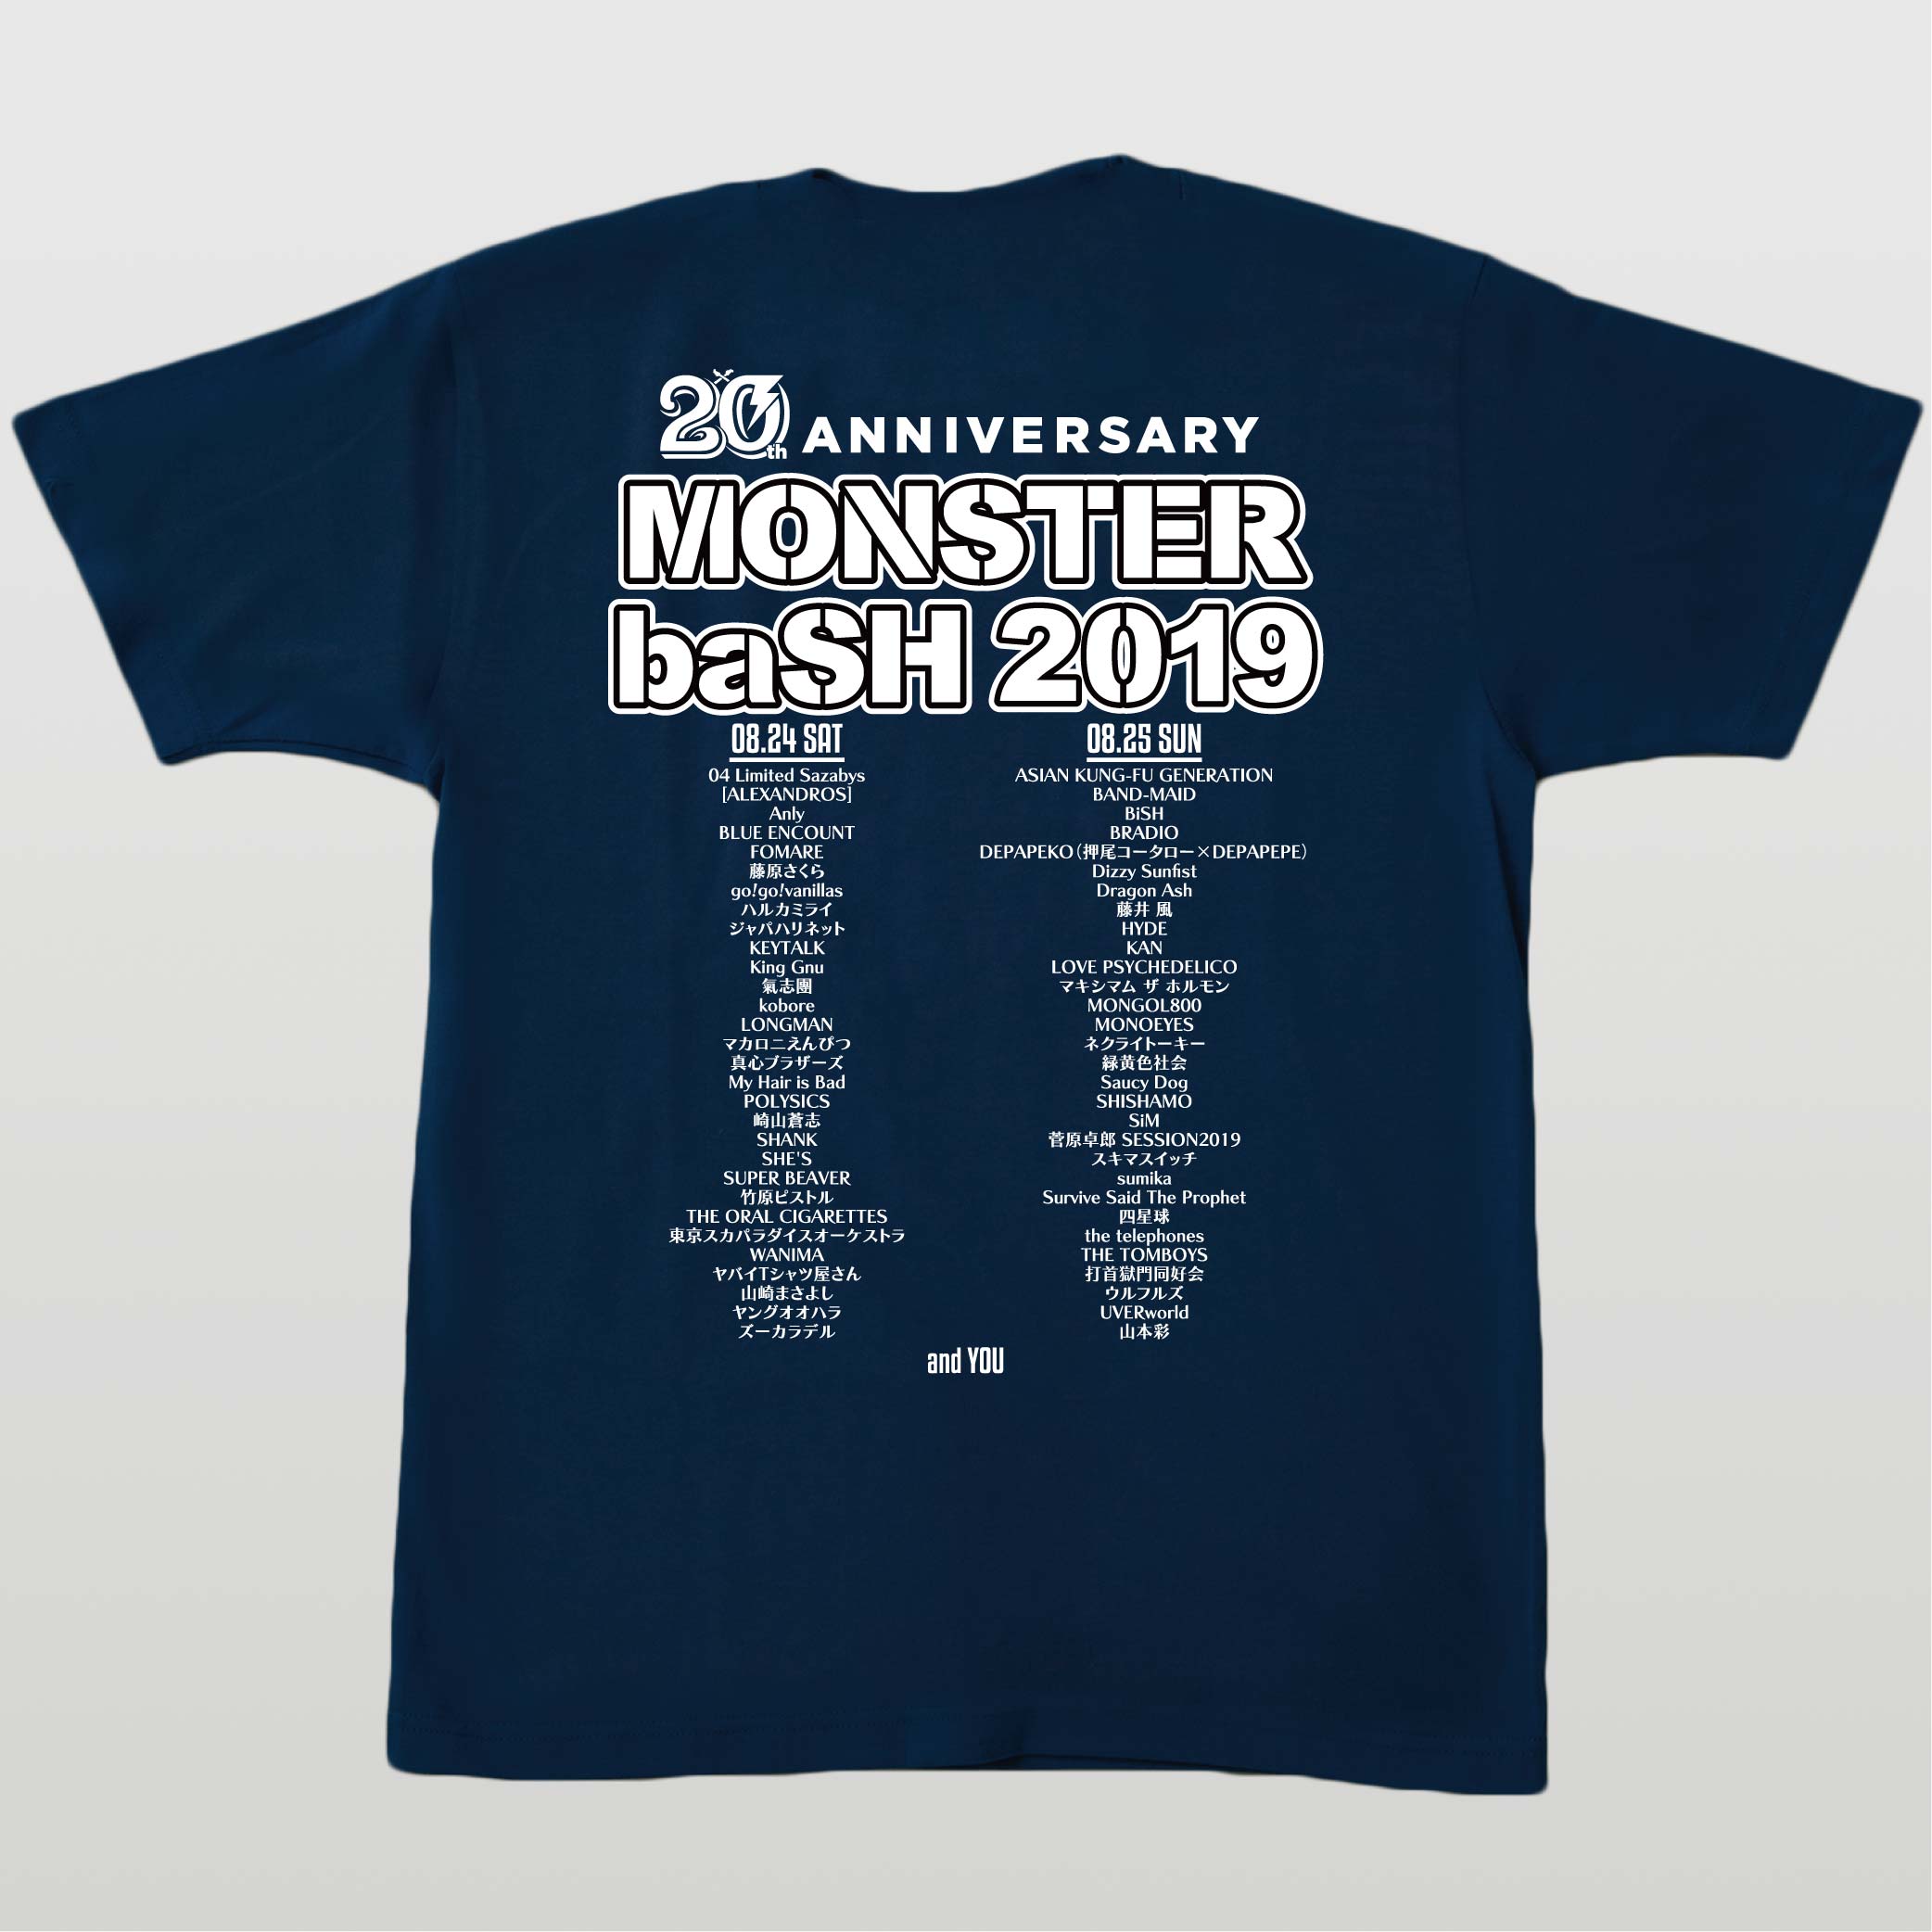 BiSH × MONSTER baSH コラボTシャツ - アイドル